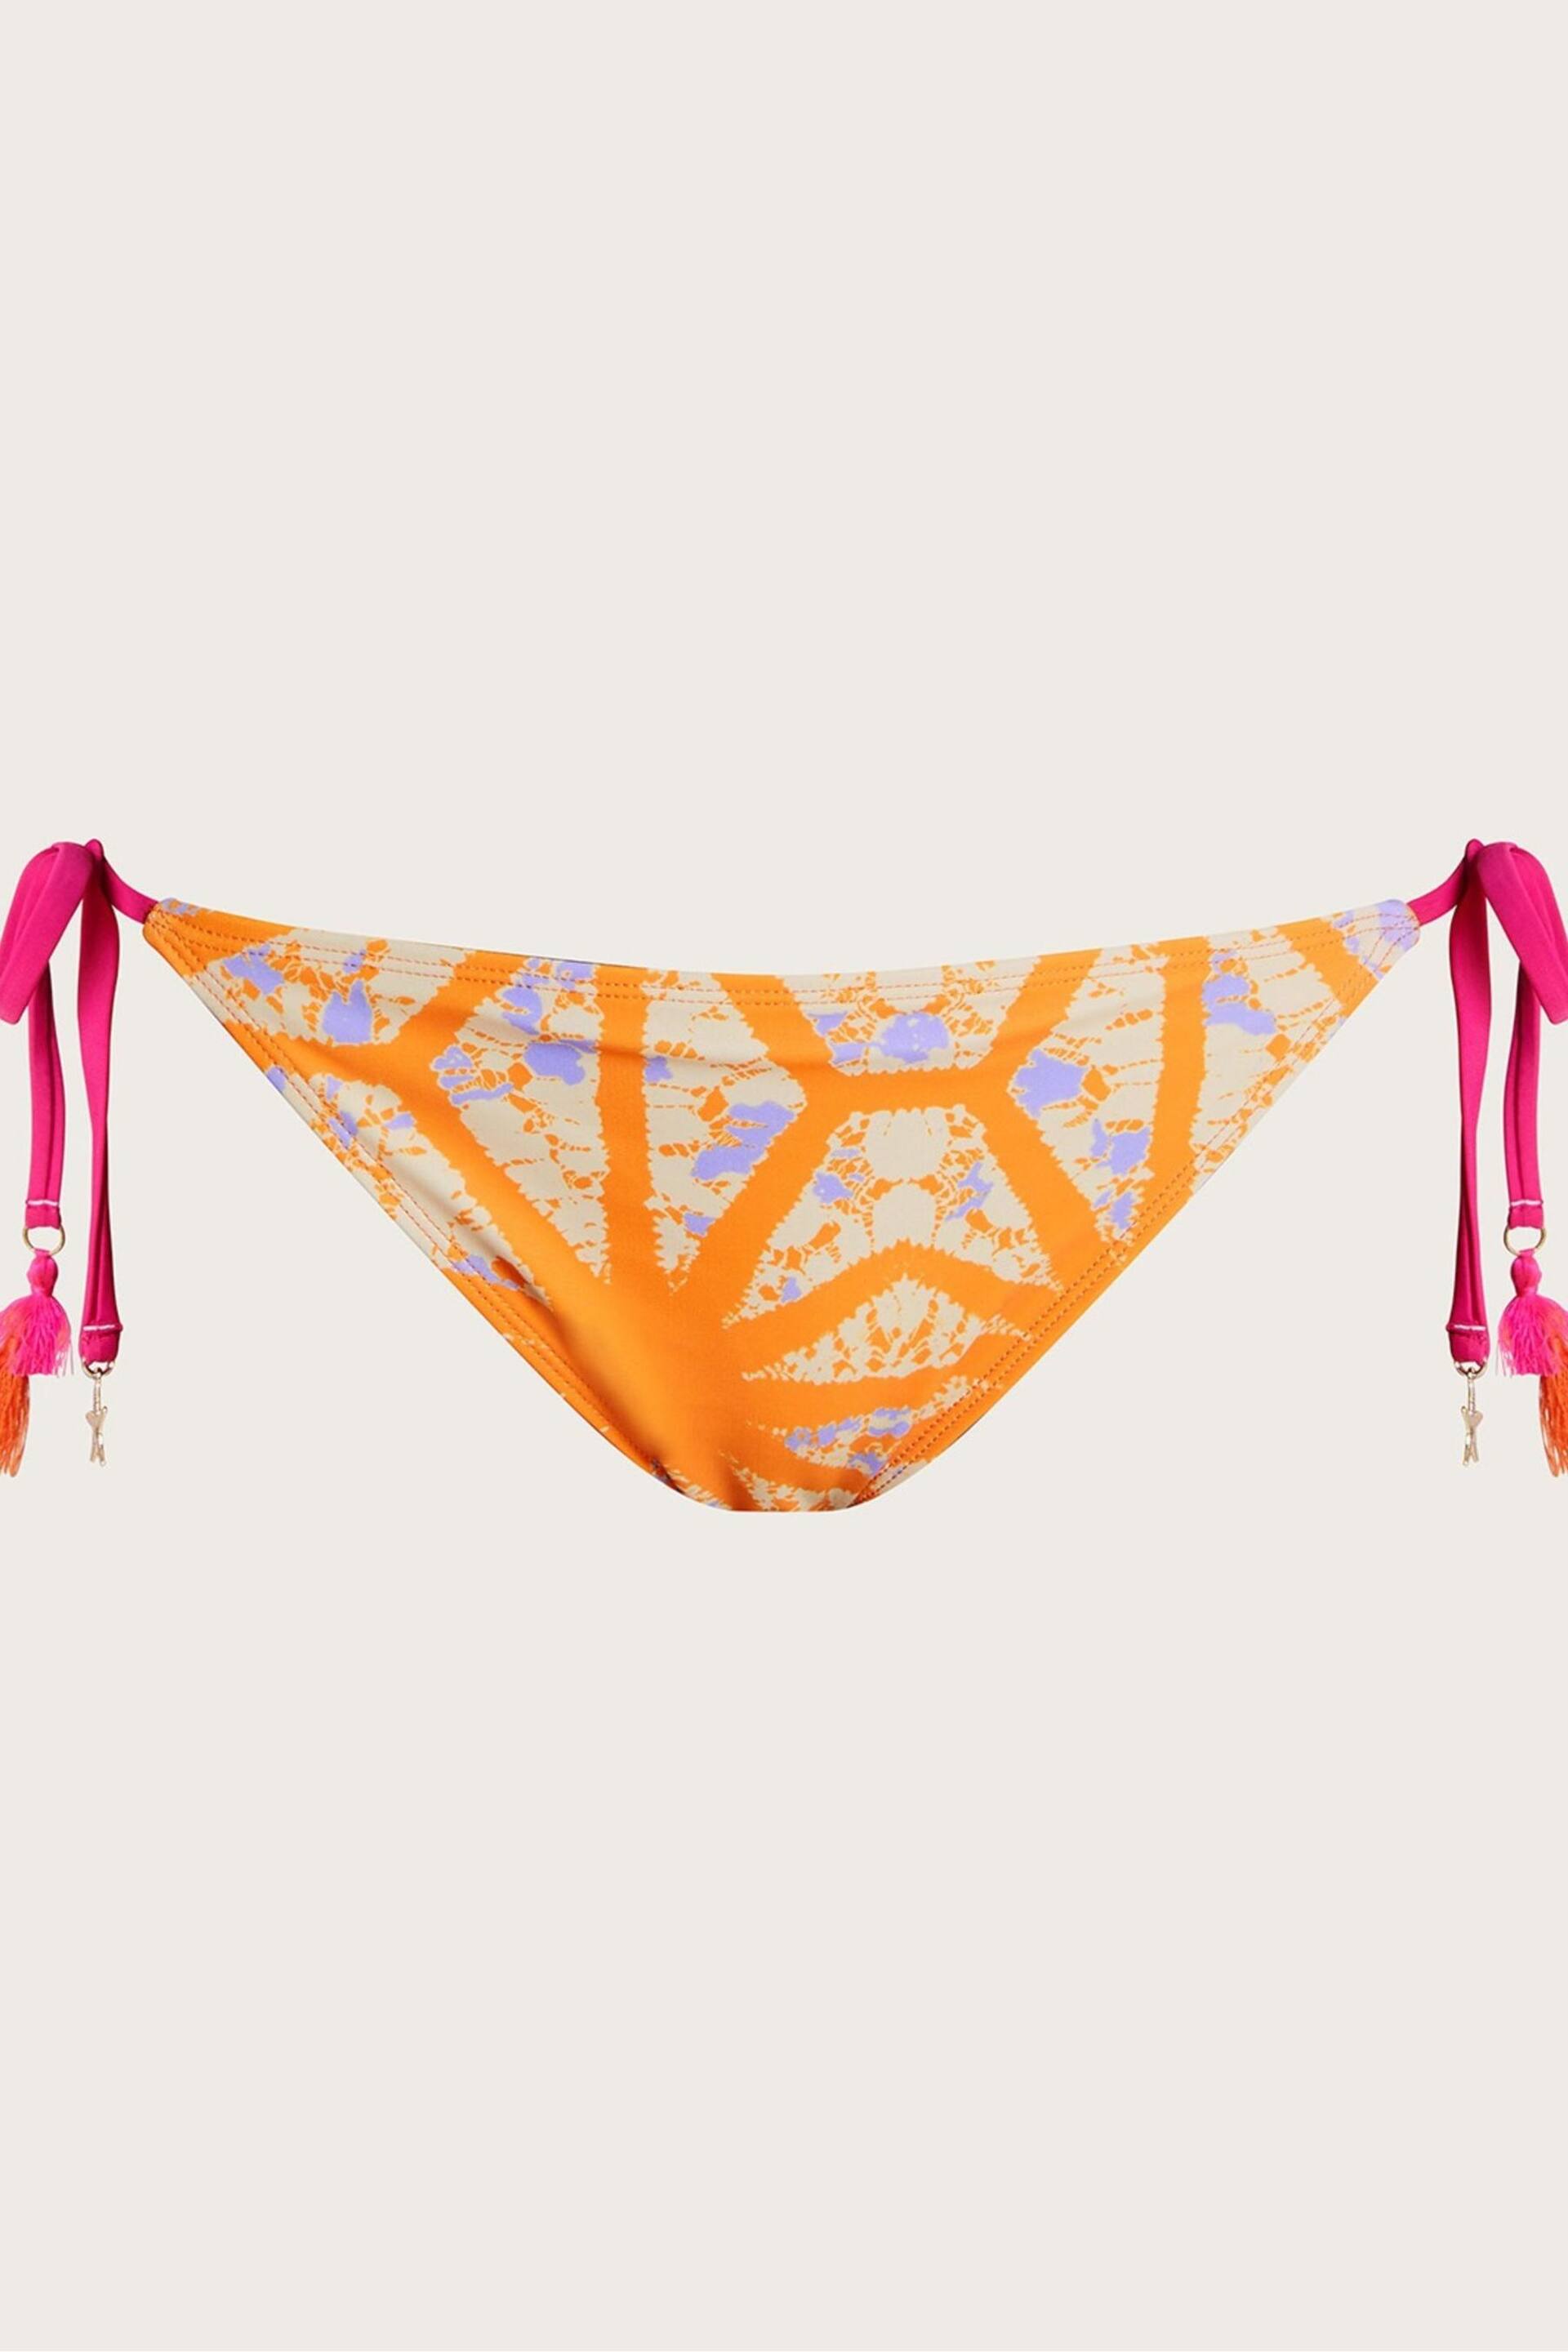 Monsoon Orange Santiago Bikini Bottoms - Image 5 of 5